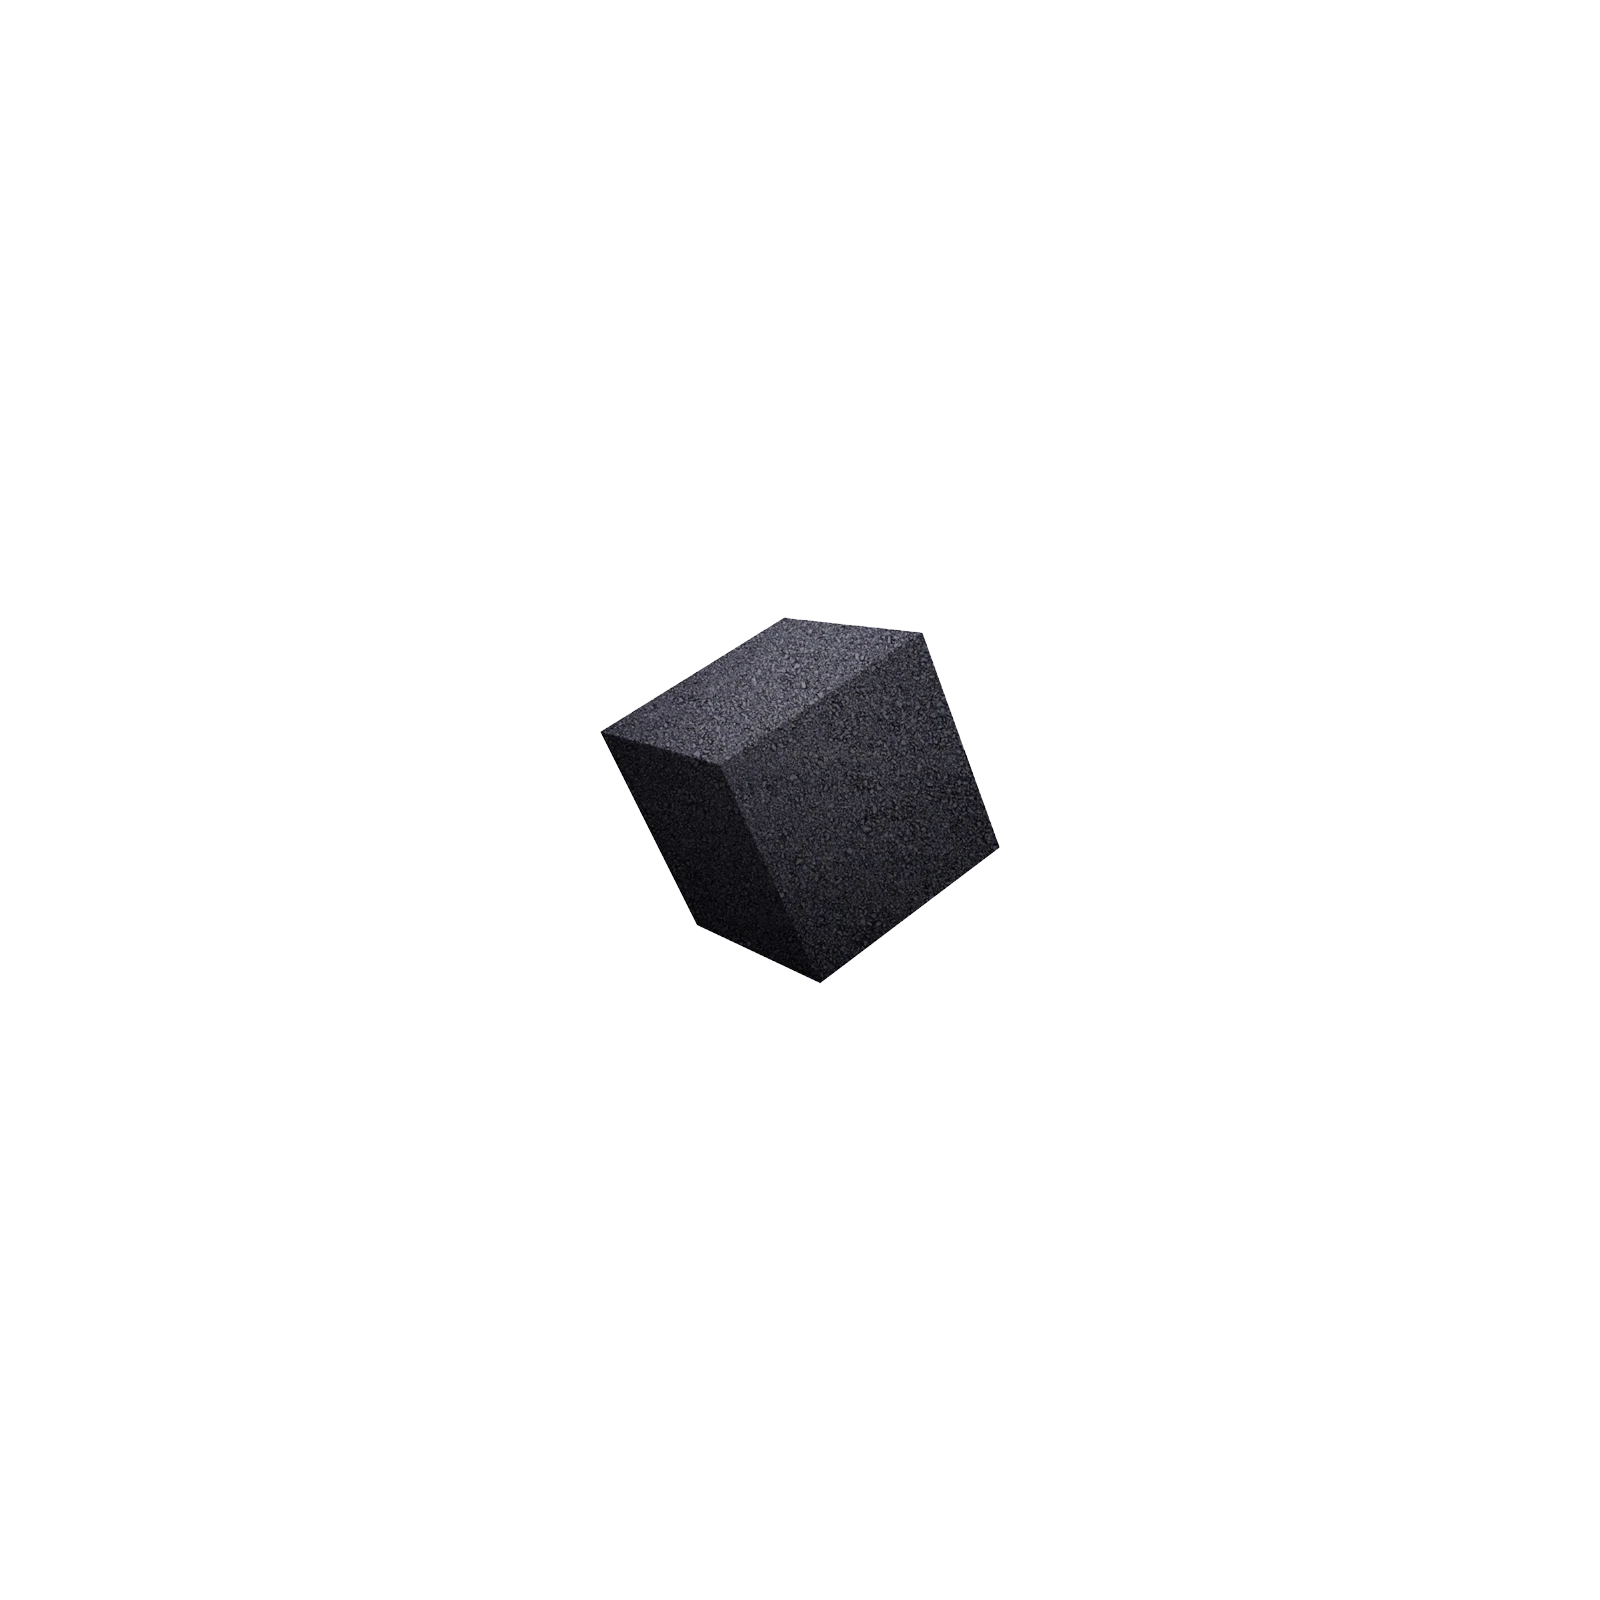 Blackcoco's - Naturkohle - Cubes26 - 1 kg | Premium Shisha-Kohle günstig online kaufen